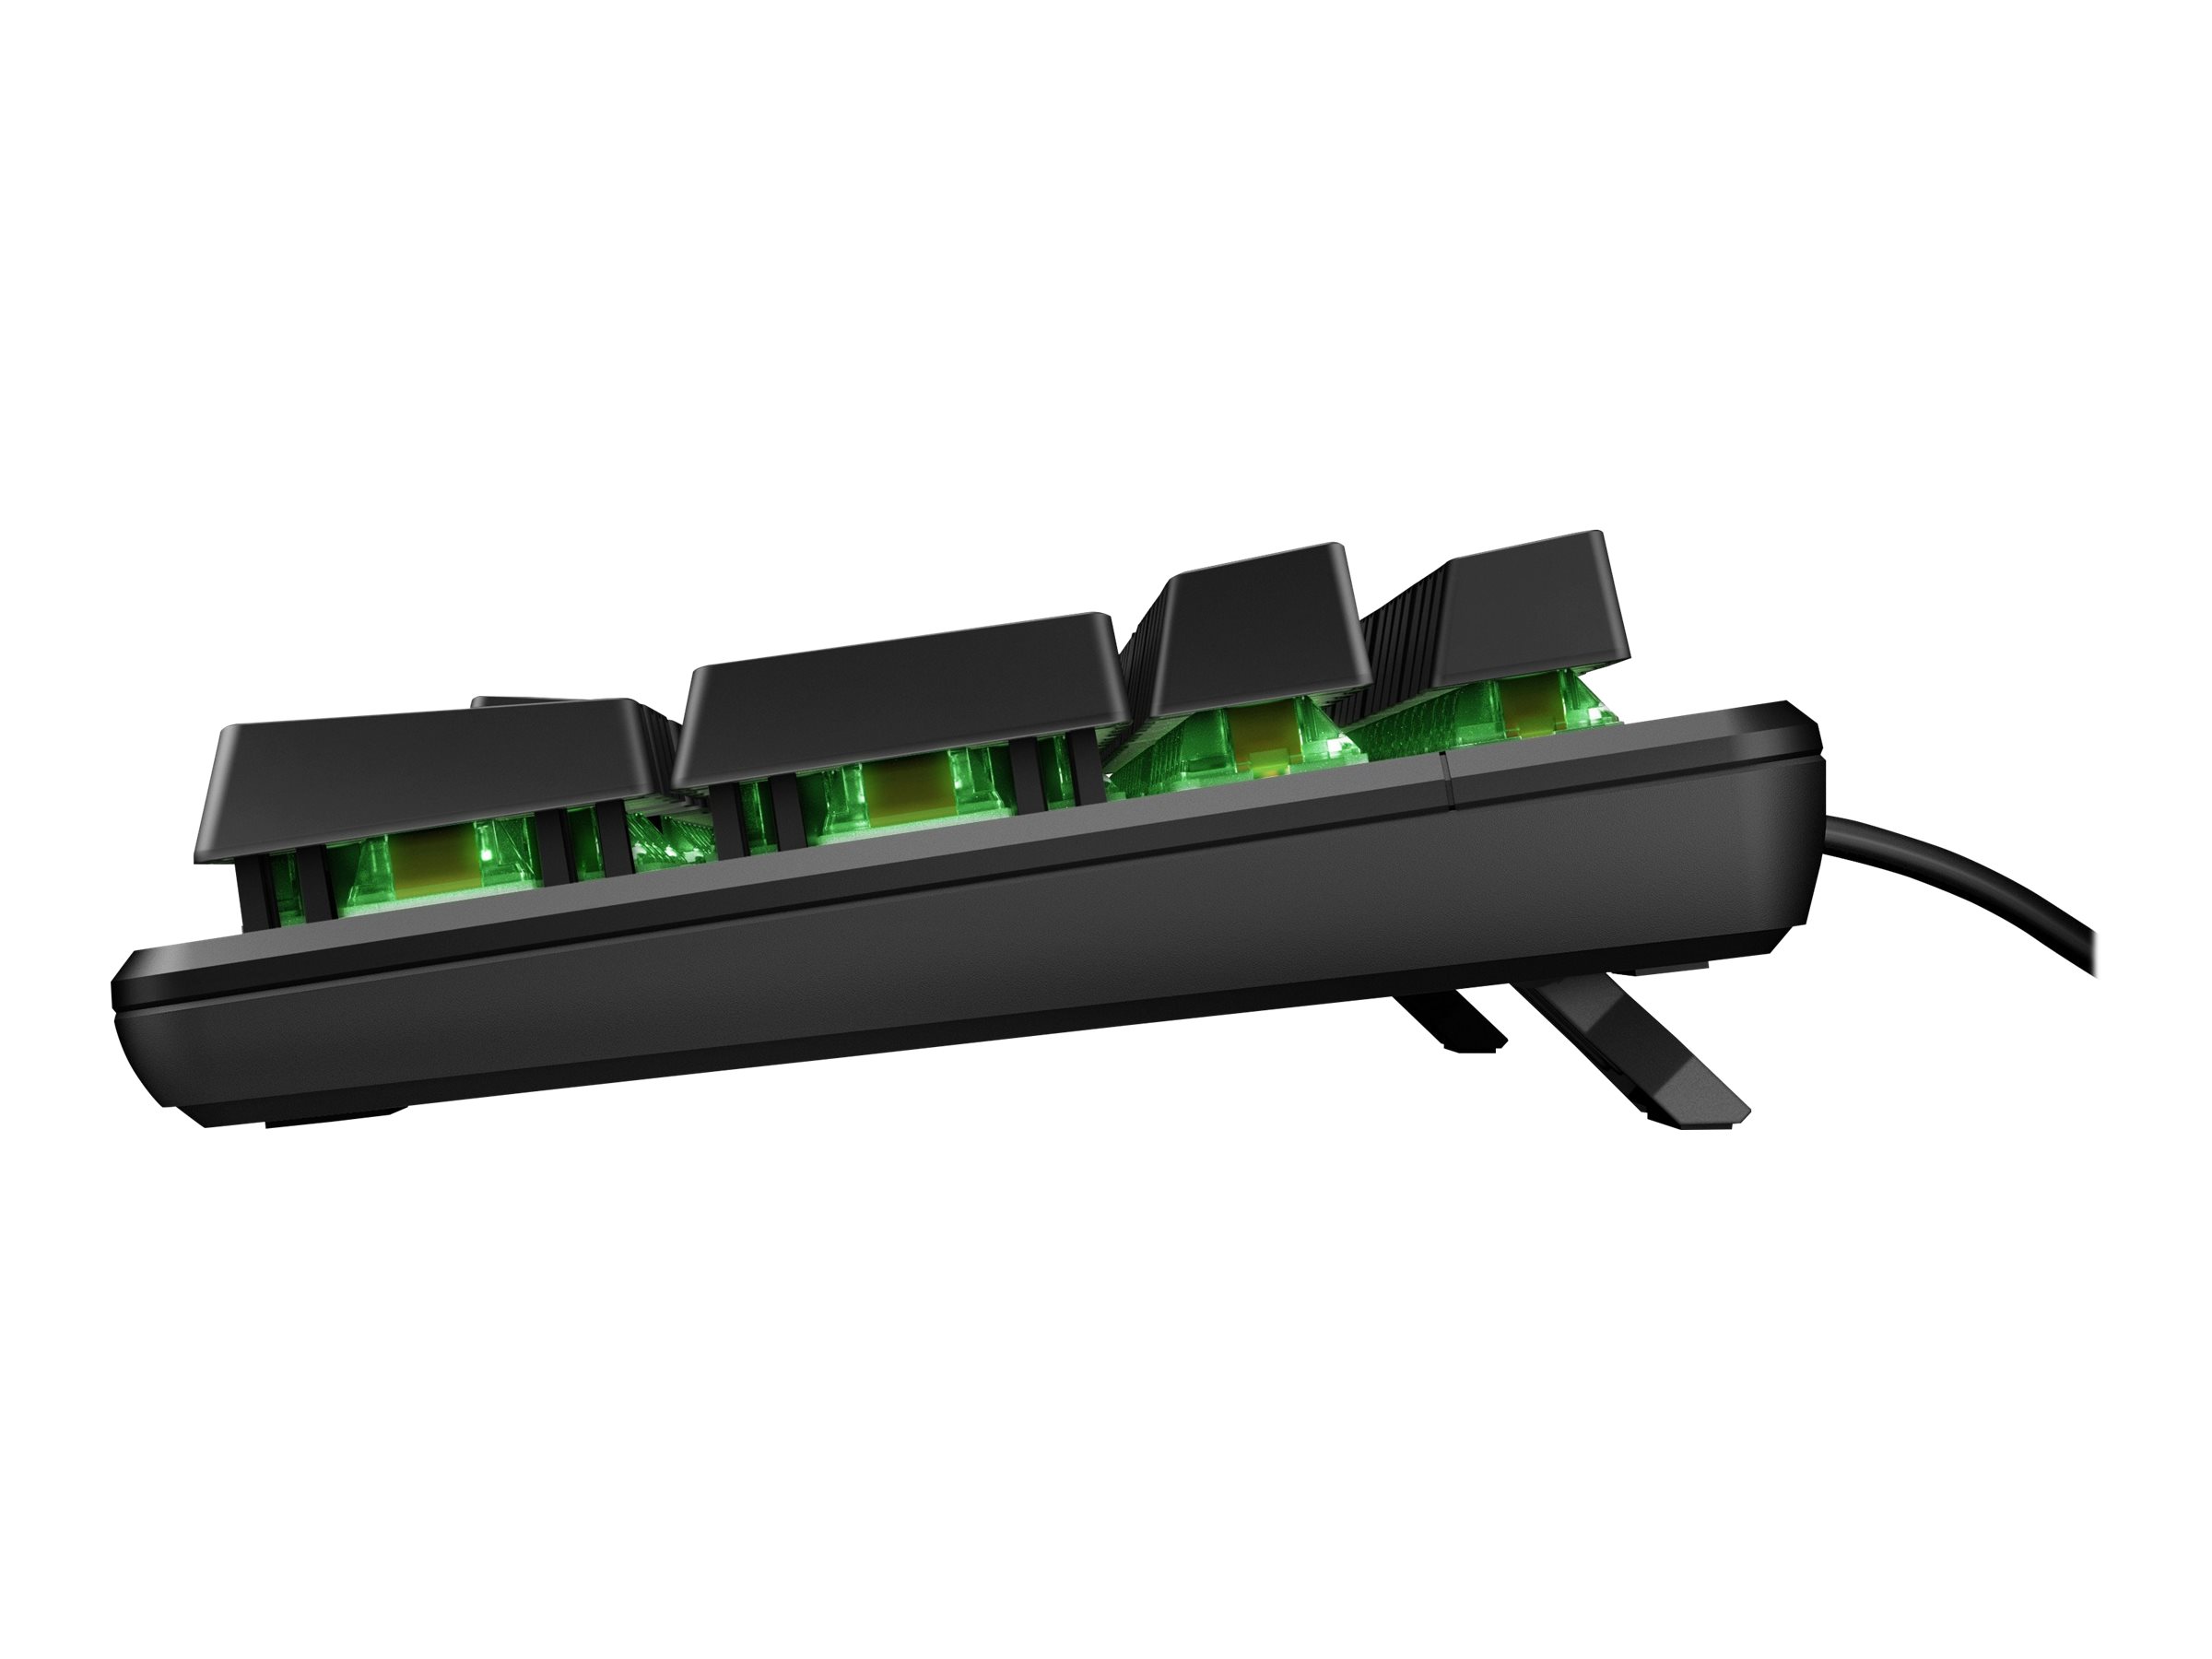 HP Pavilion Gaming 550 - Tastatur - Hintergrundbeleuchtung